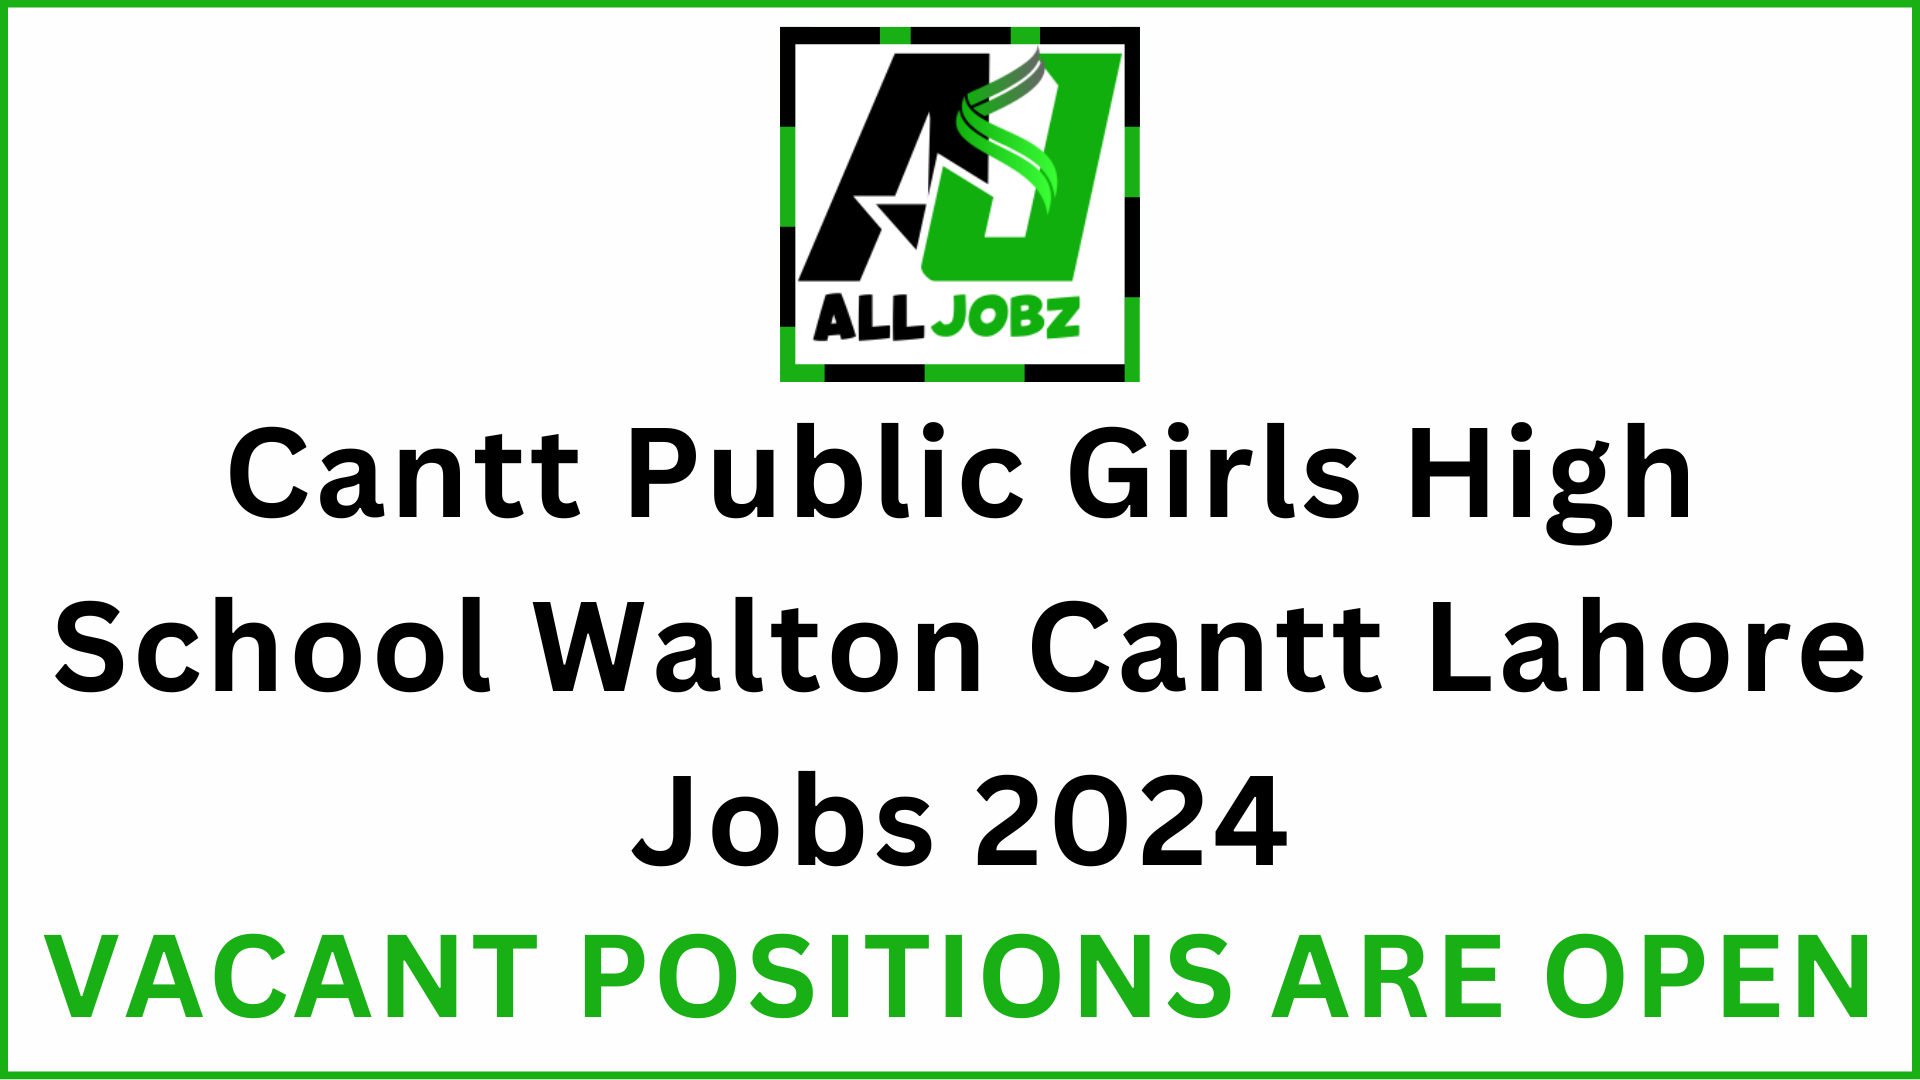 Cantt Public Girls High School Walton Cantt Lahore Jobs 2024